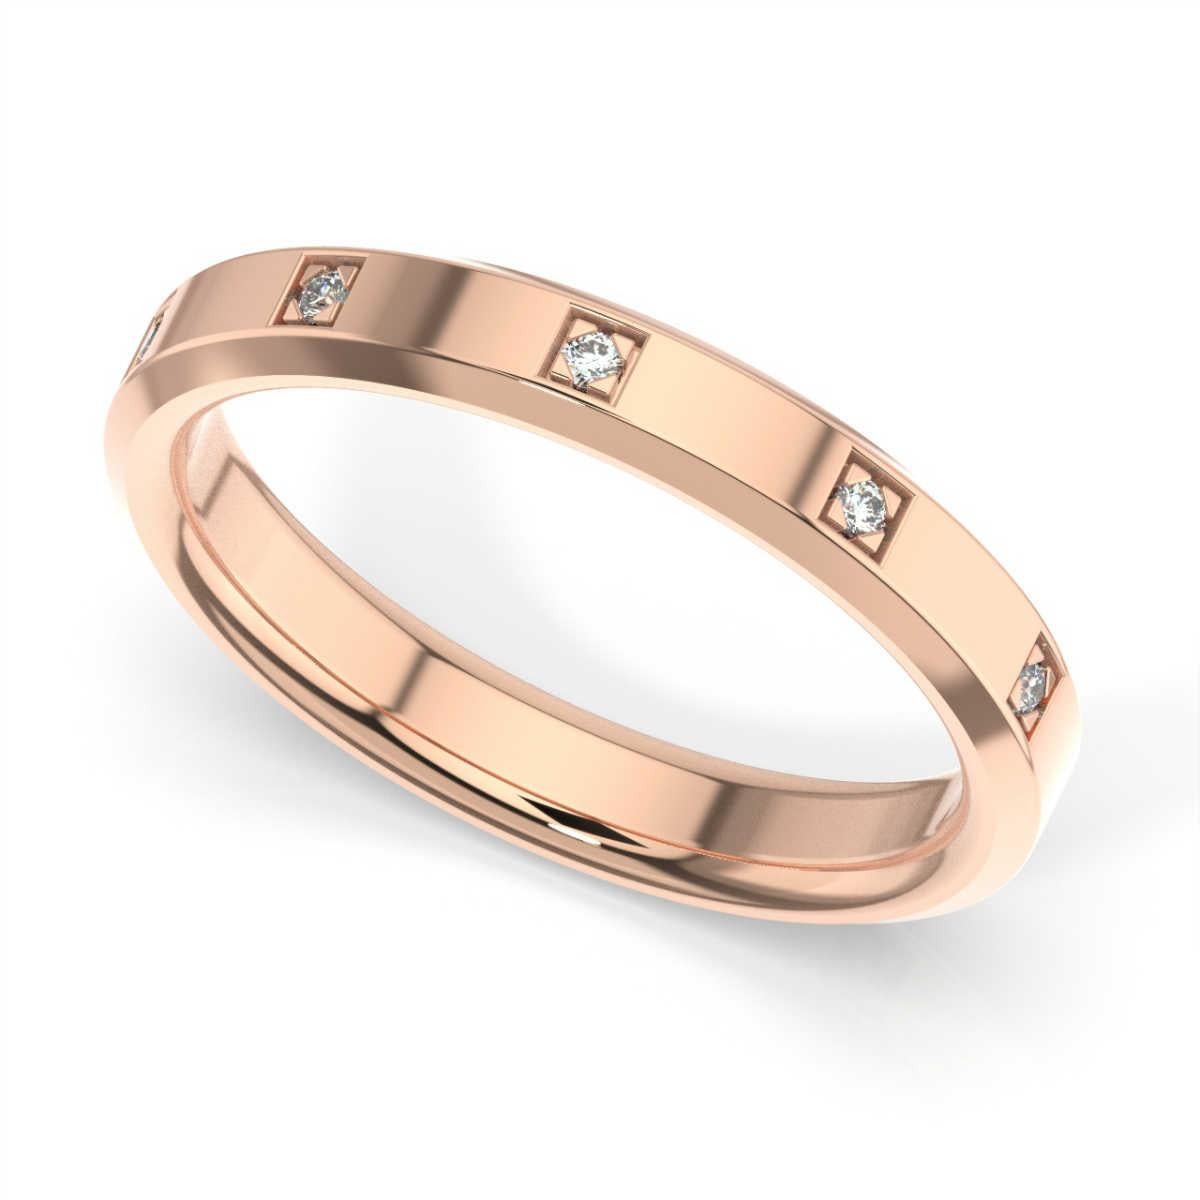 10 carat eternity ring price